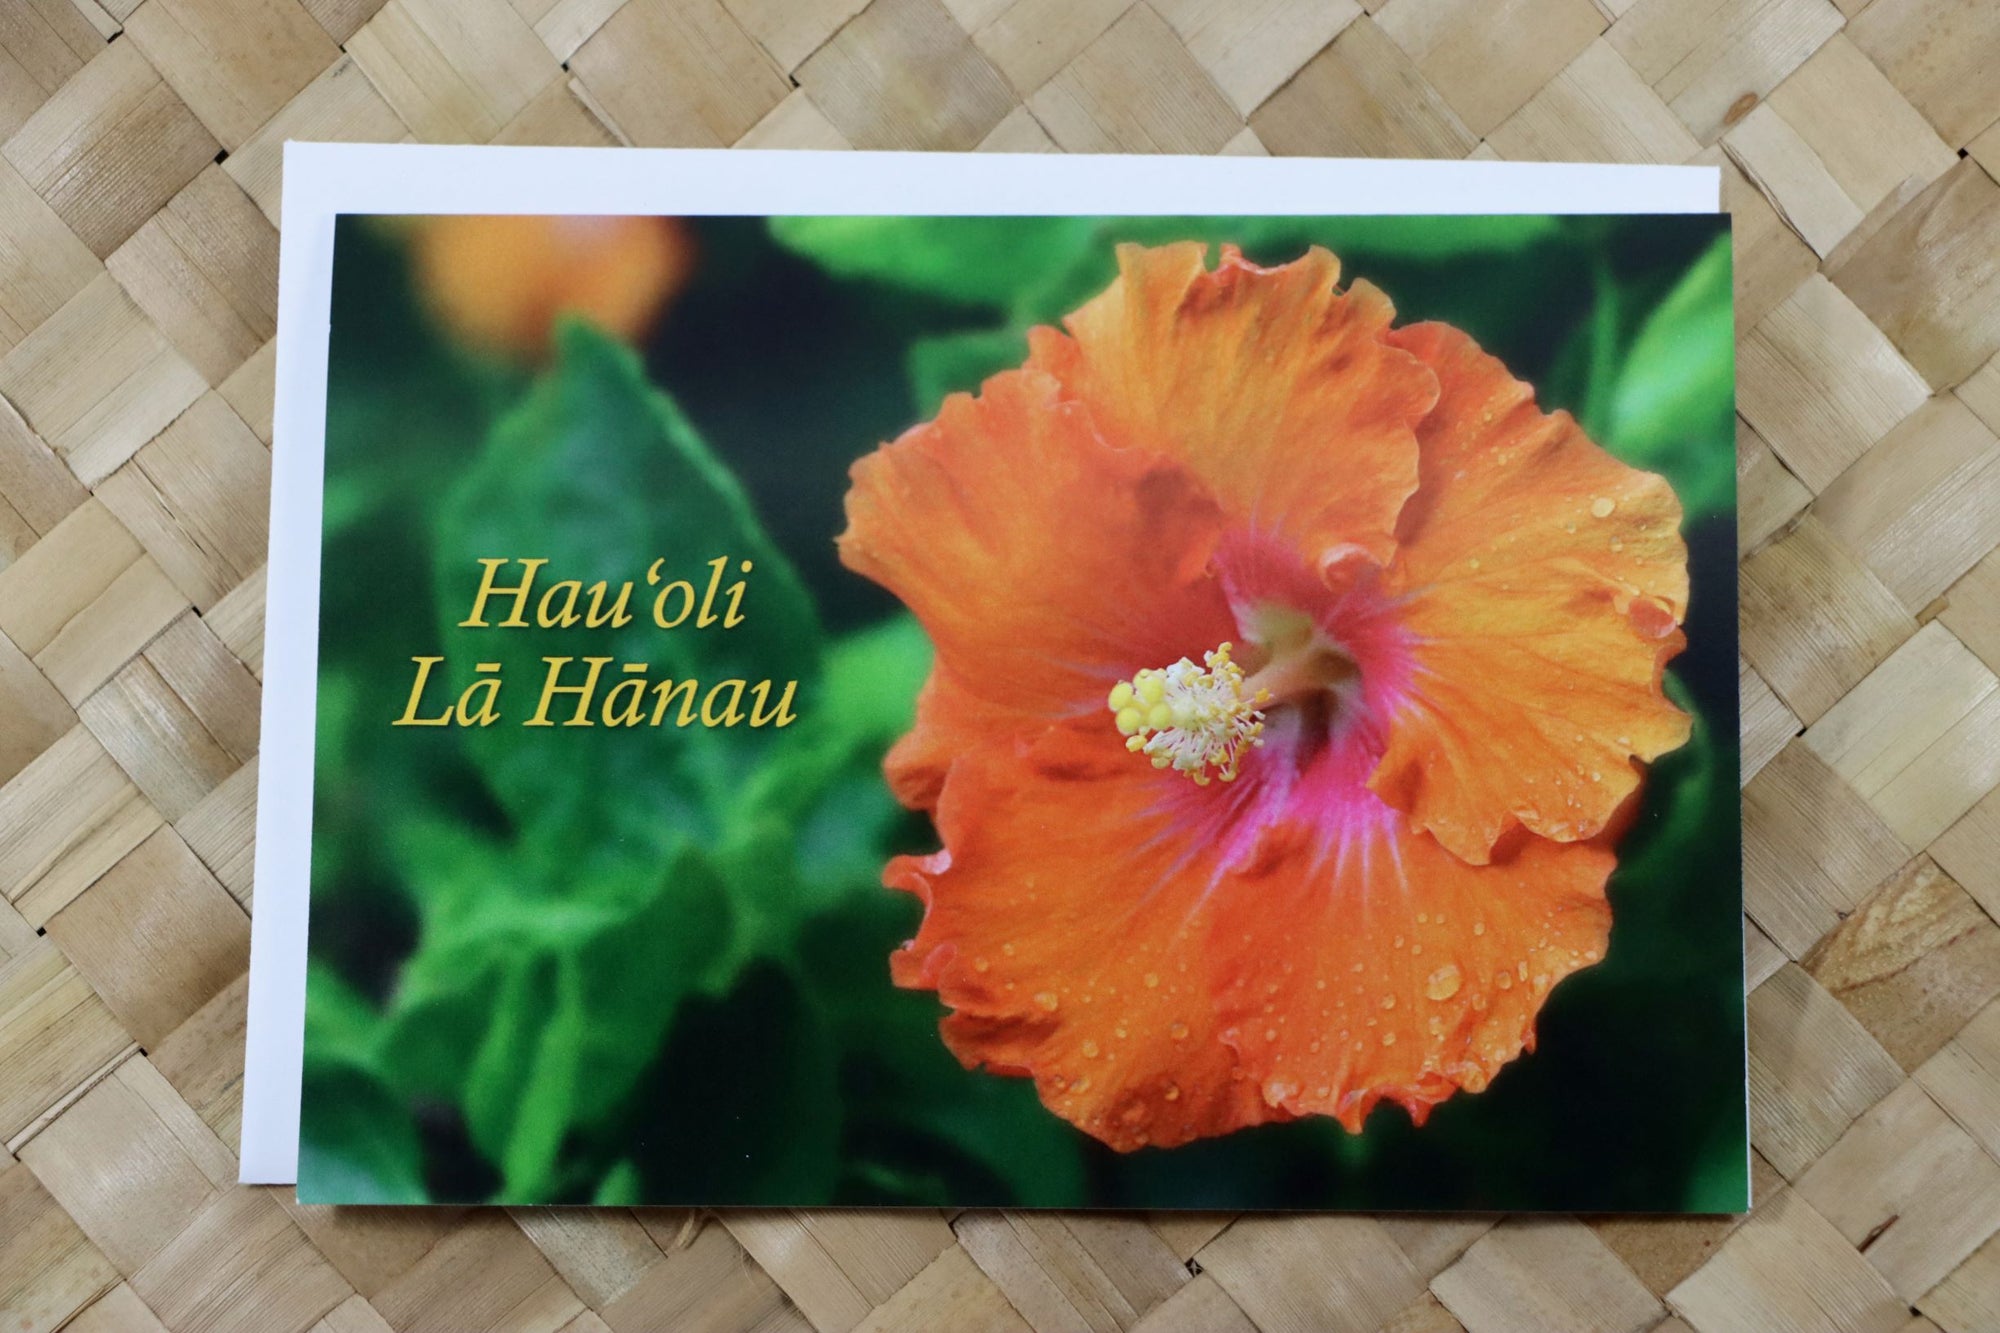 Pop-Up Mākeke - Alohi Images Maui - Hau‘oli Lā Hānau (Happy Birthday) Blank Greeting Card - Orange Hibiscus - Front View